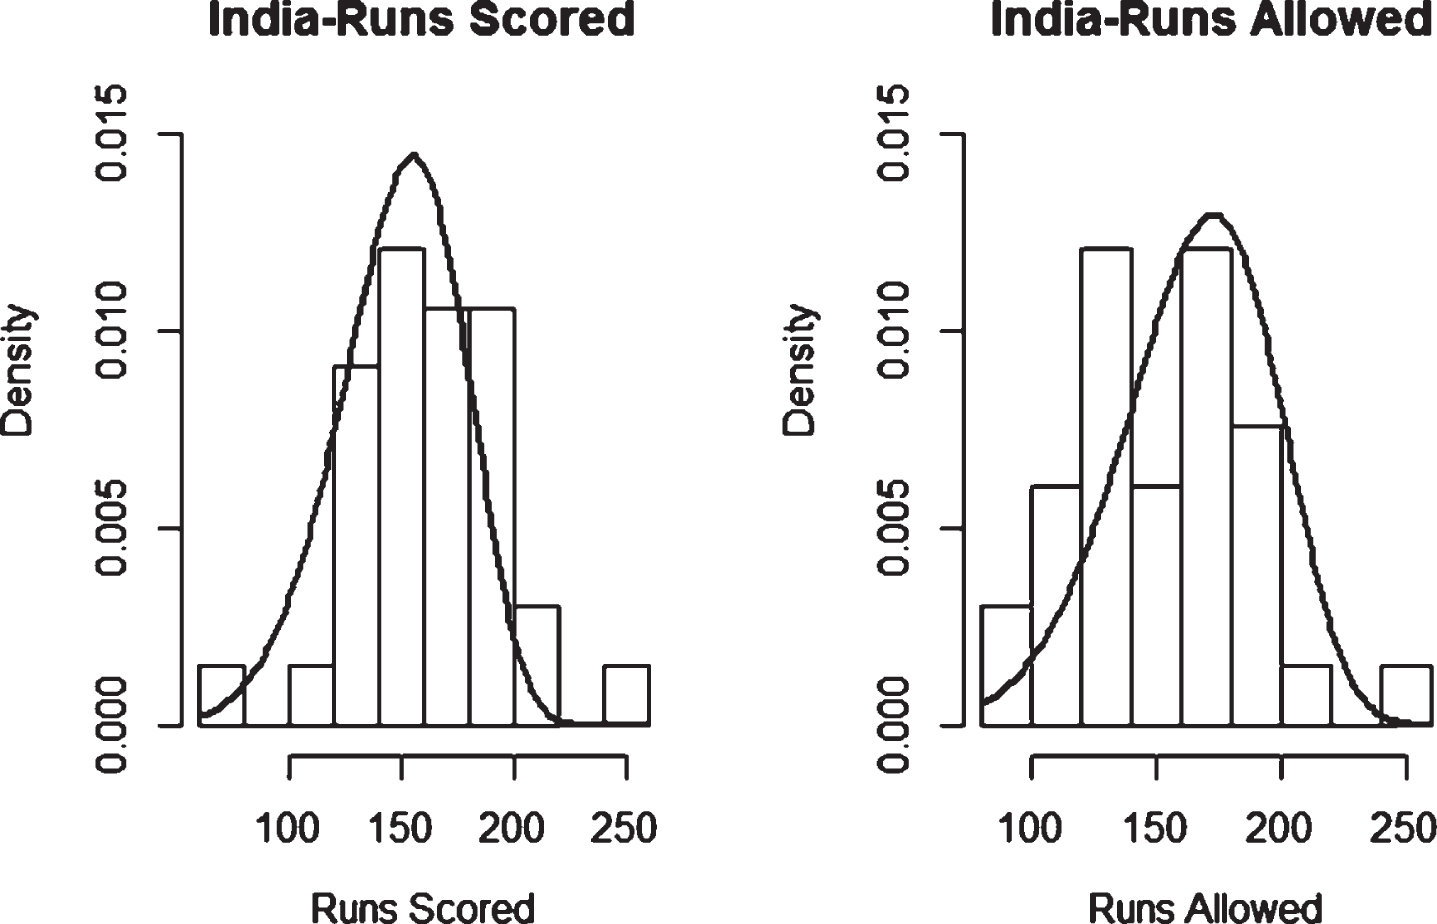 Weibull Distribution Fit for Runs Scored and Runs Allowed for India using Maximum Likelihood Method (Twenty20).